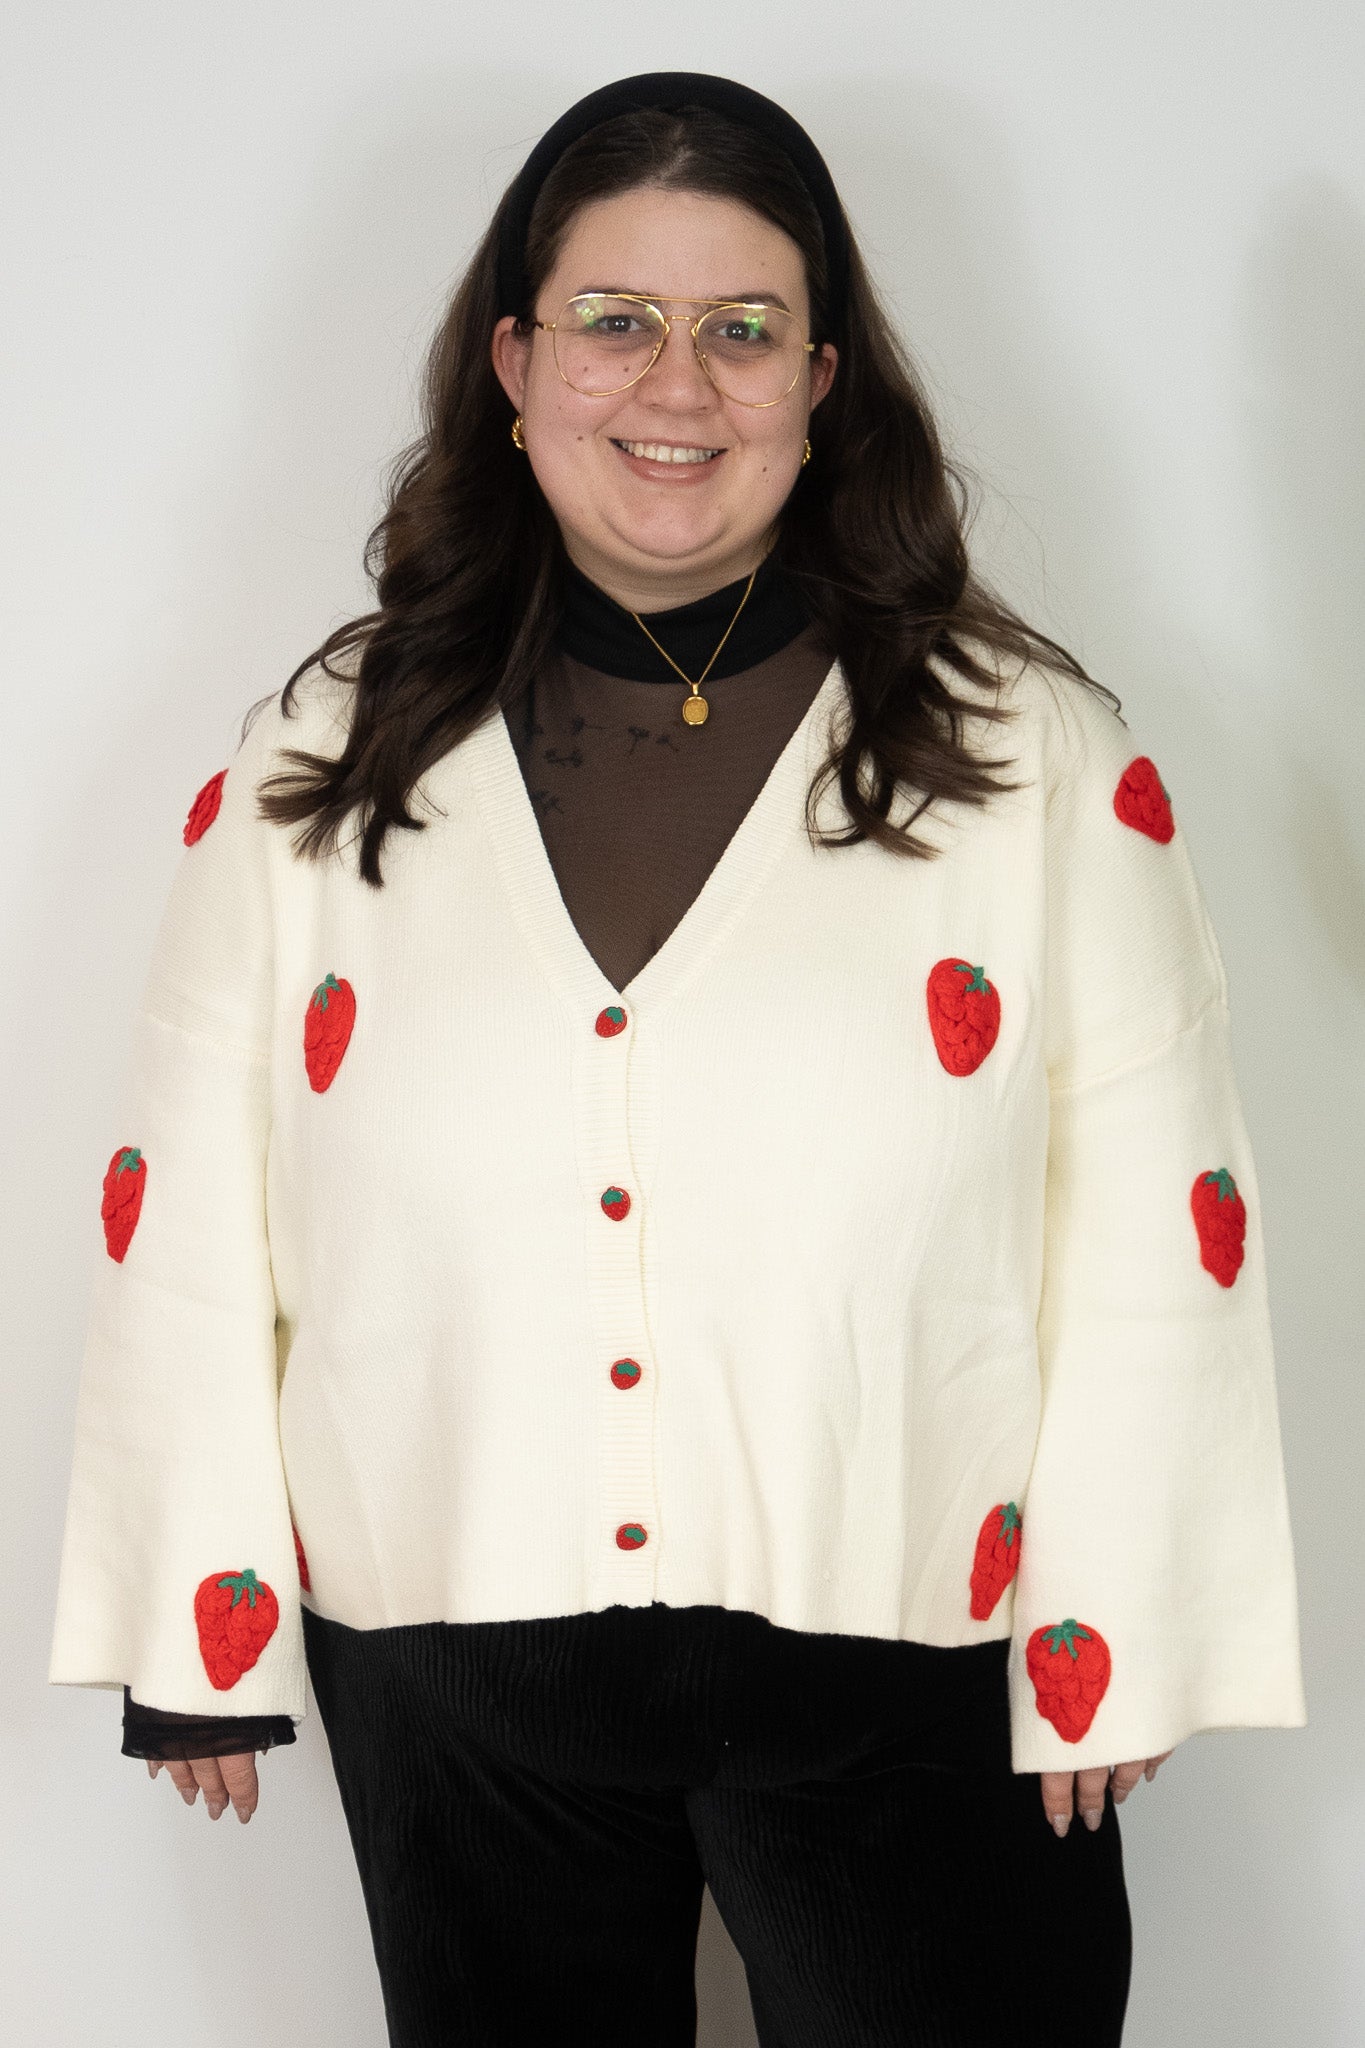 Strawberry cardigan plus size clothing Canada winnipeg